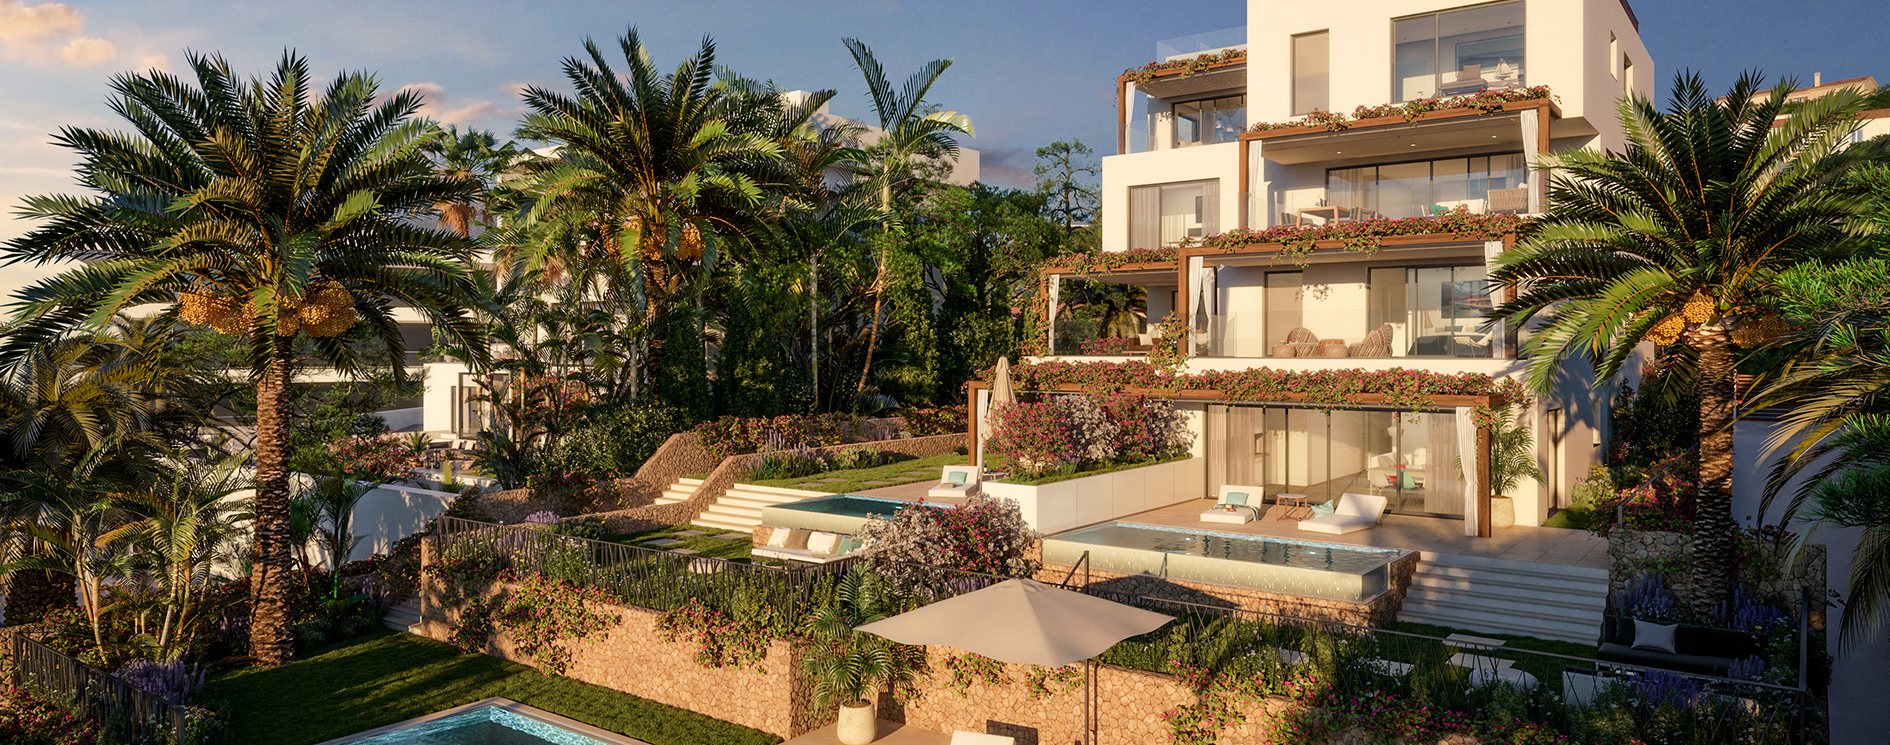 Exklusive Apartmentanlage auf Mallorca – ROOF by ELEMENTS